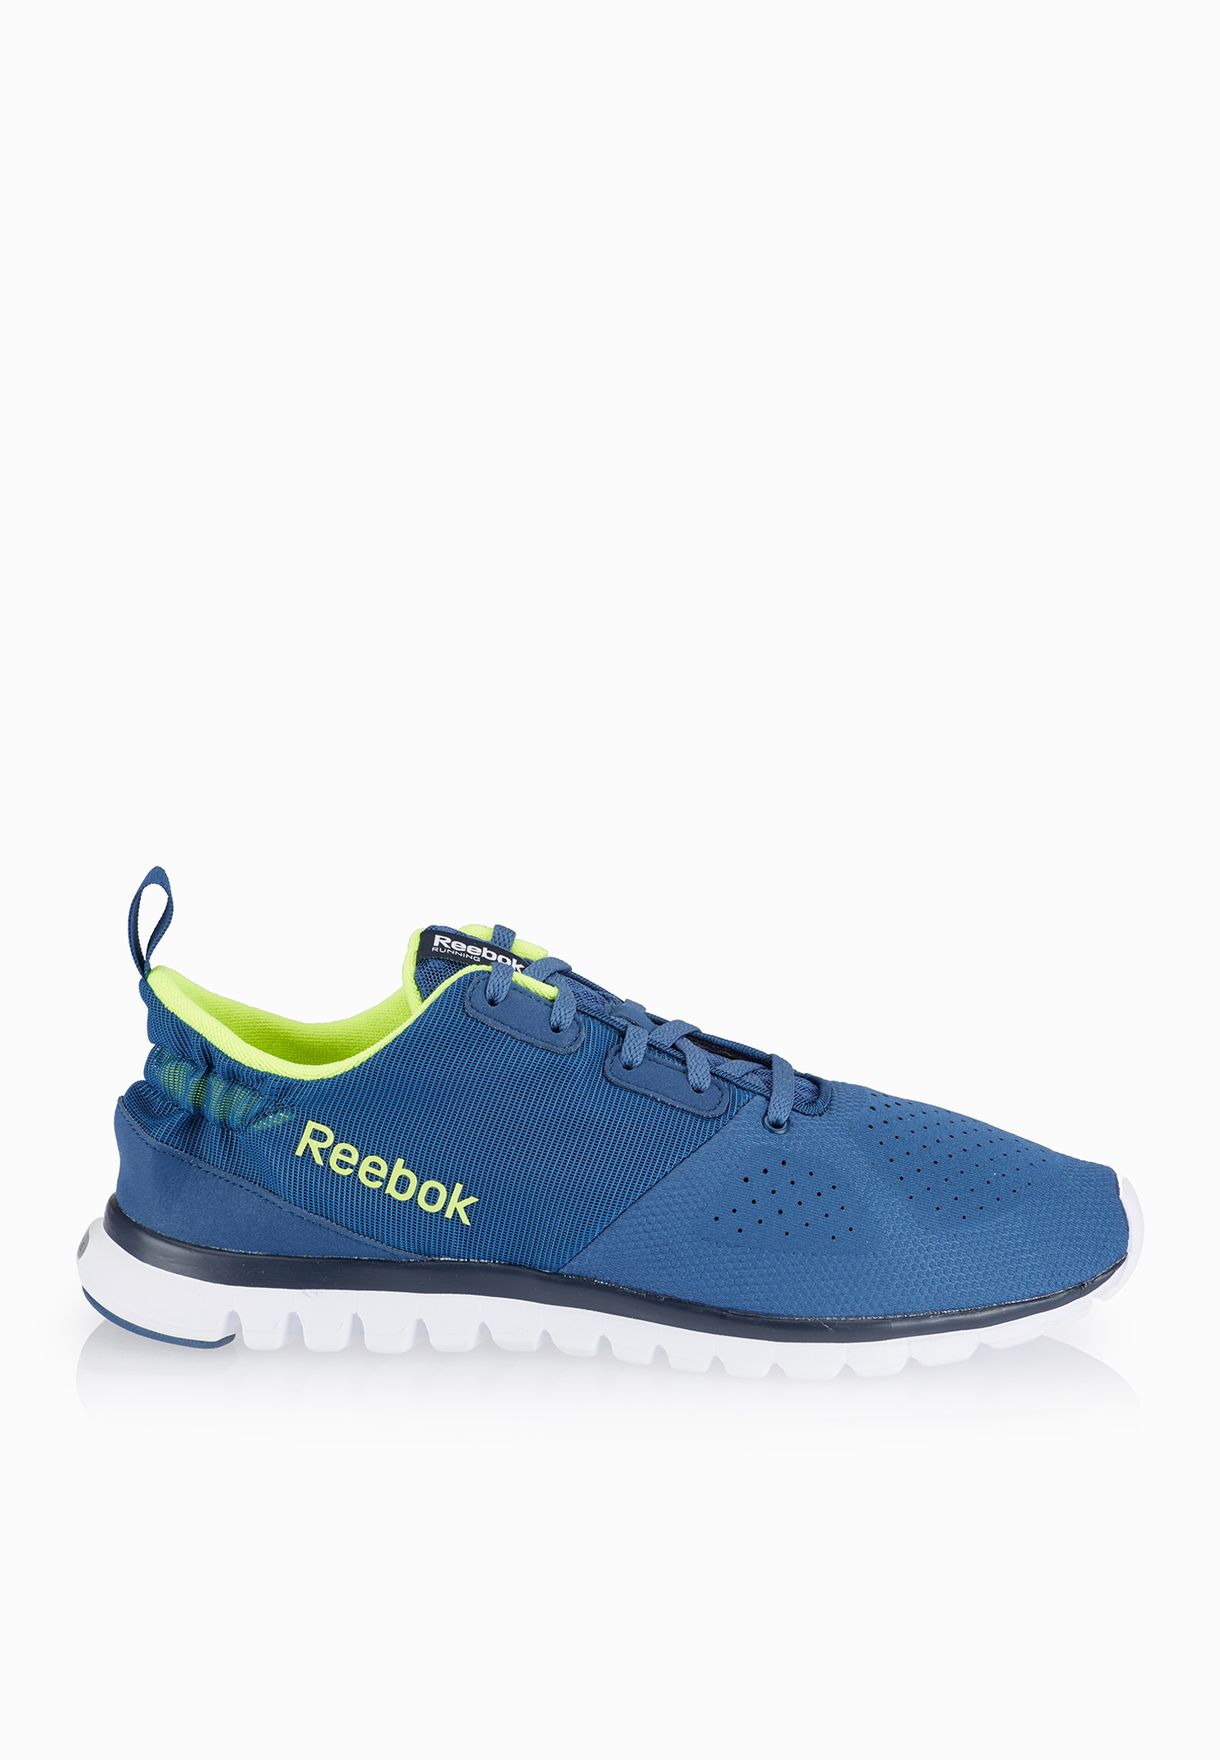 reebok sublite aim blue running shoes